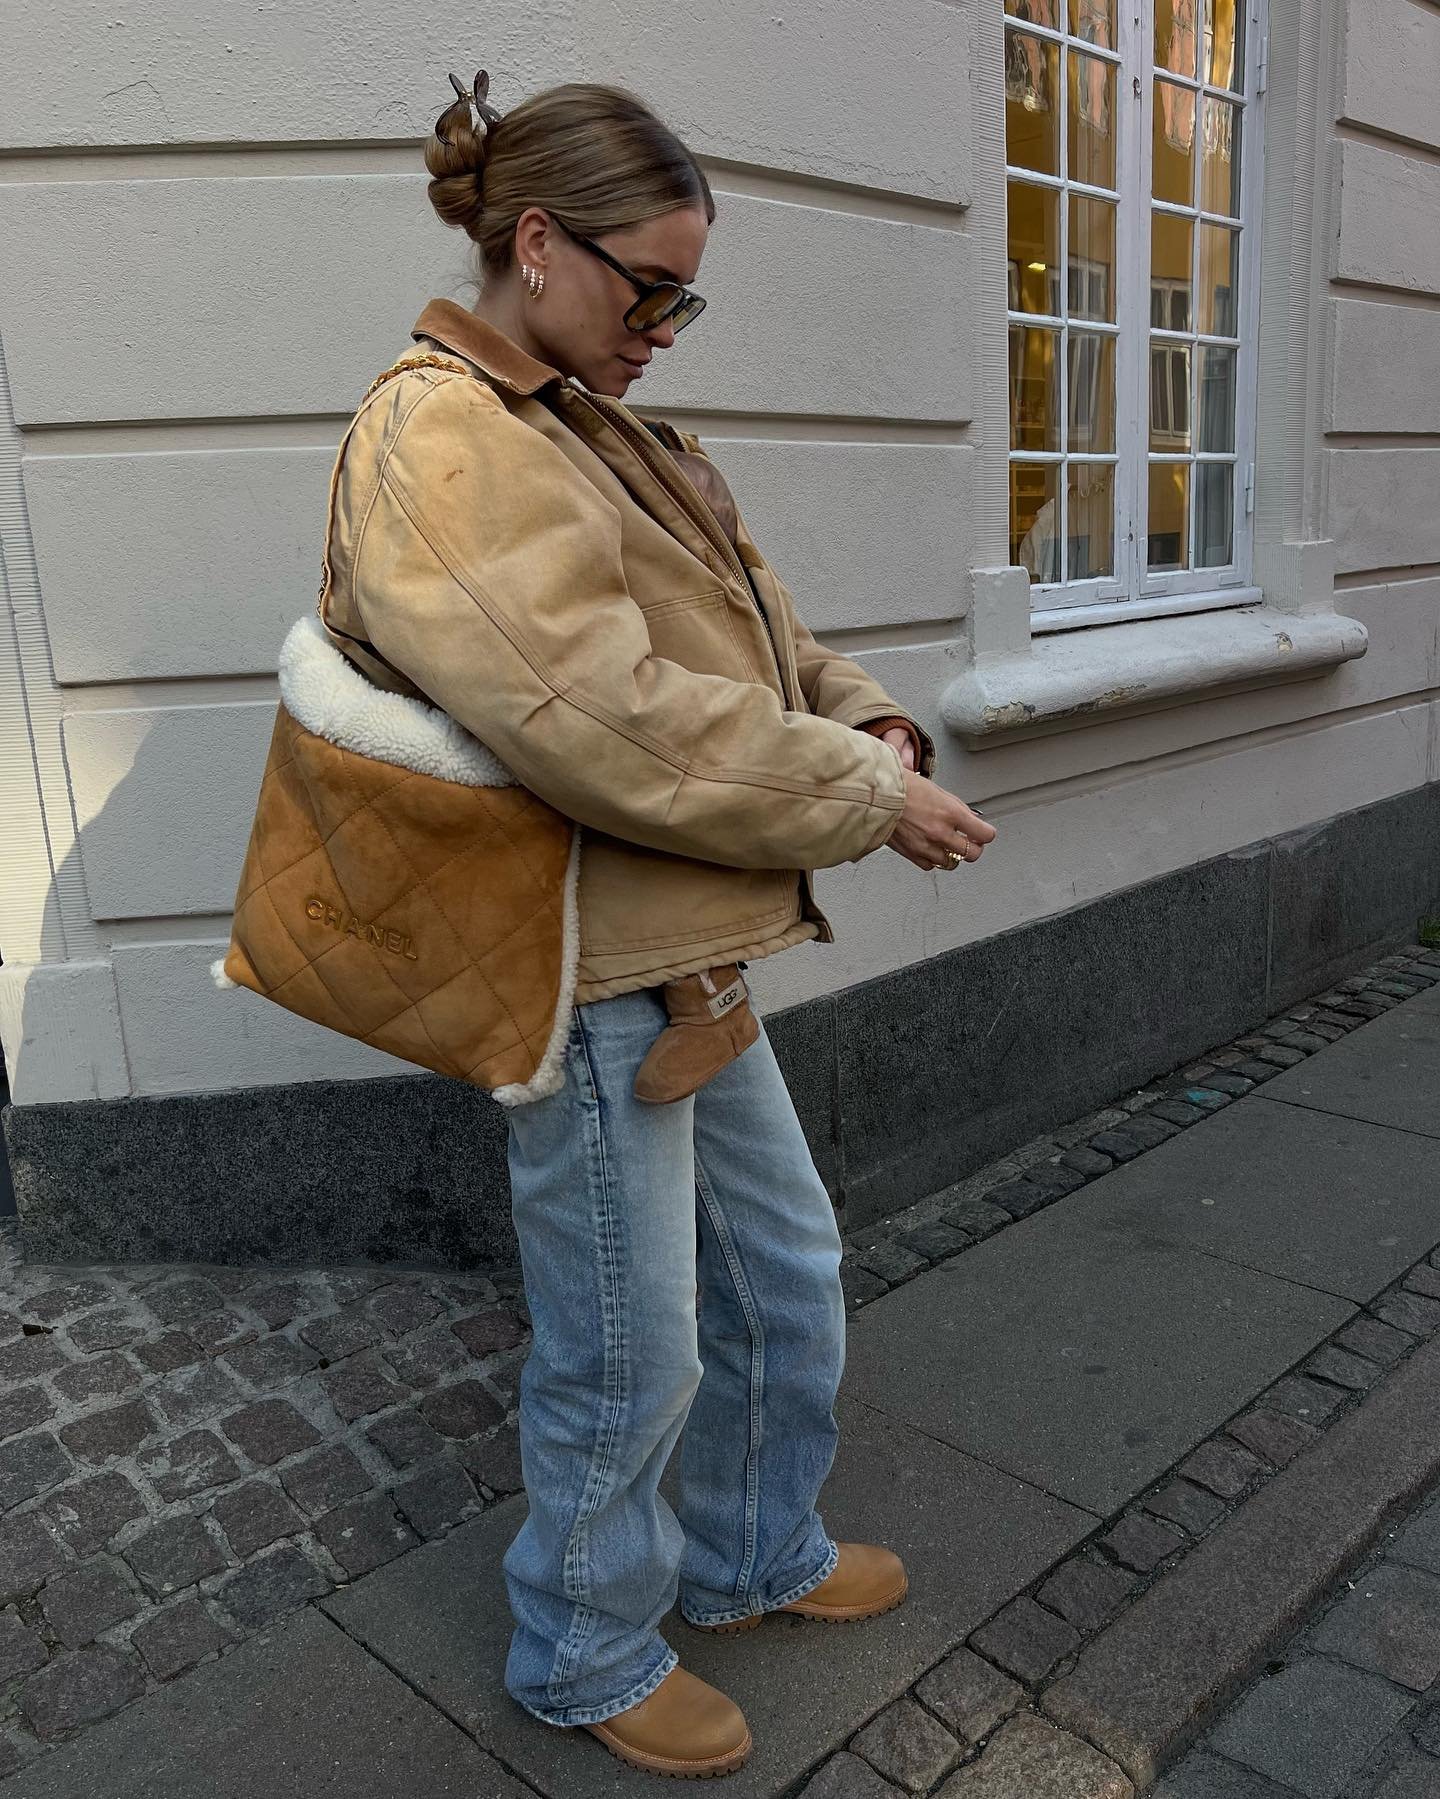 Pernille Teisbaek - bota UGG - sapato polêmico - Inverno - Copenhagen - https://stealthelook.com.br